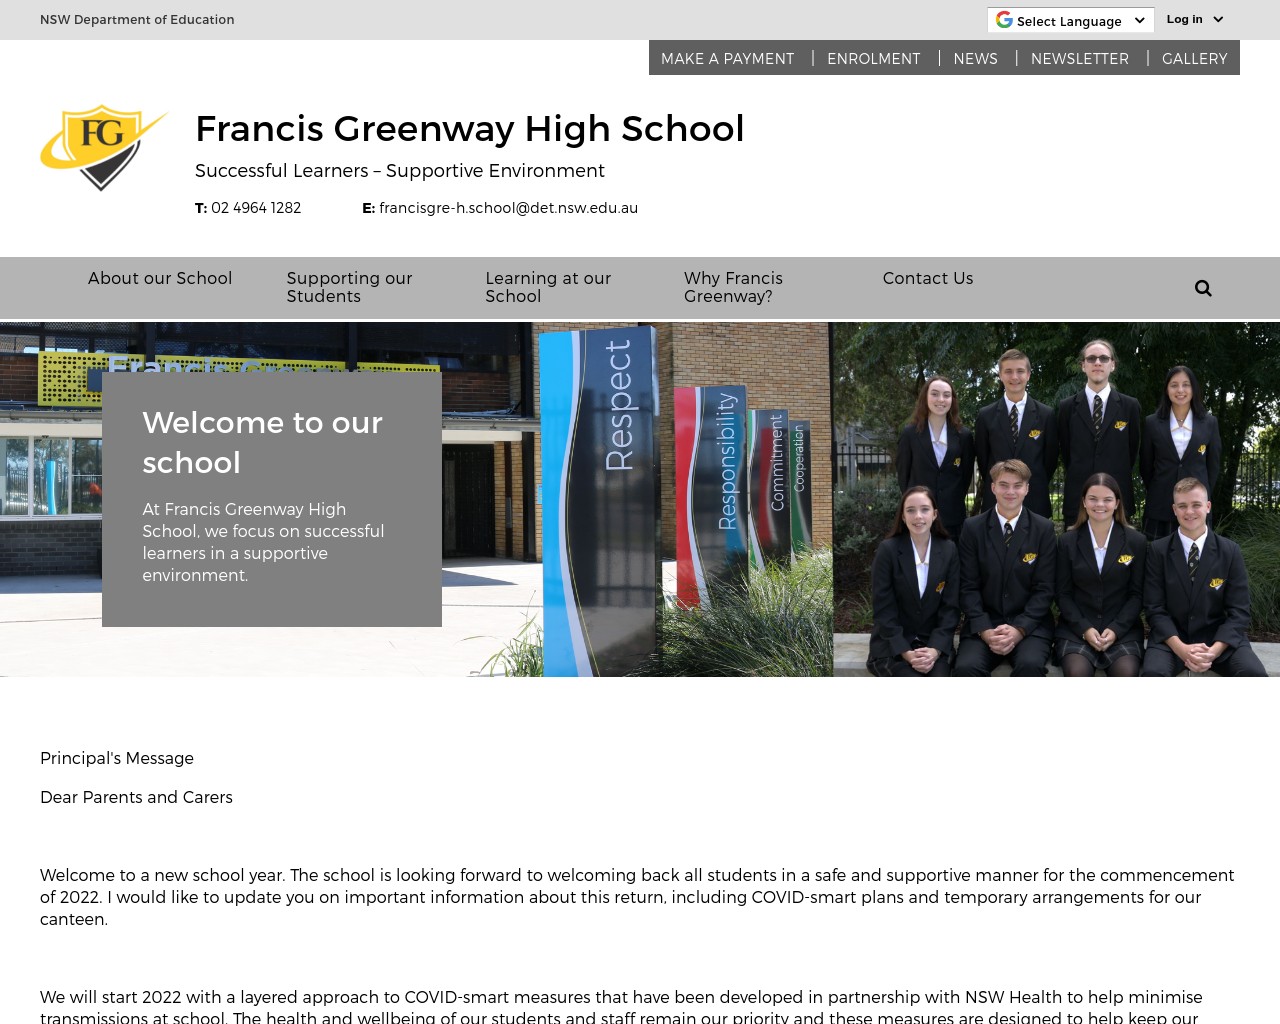 Francis Greenway High School